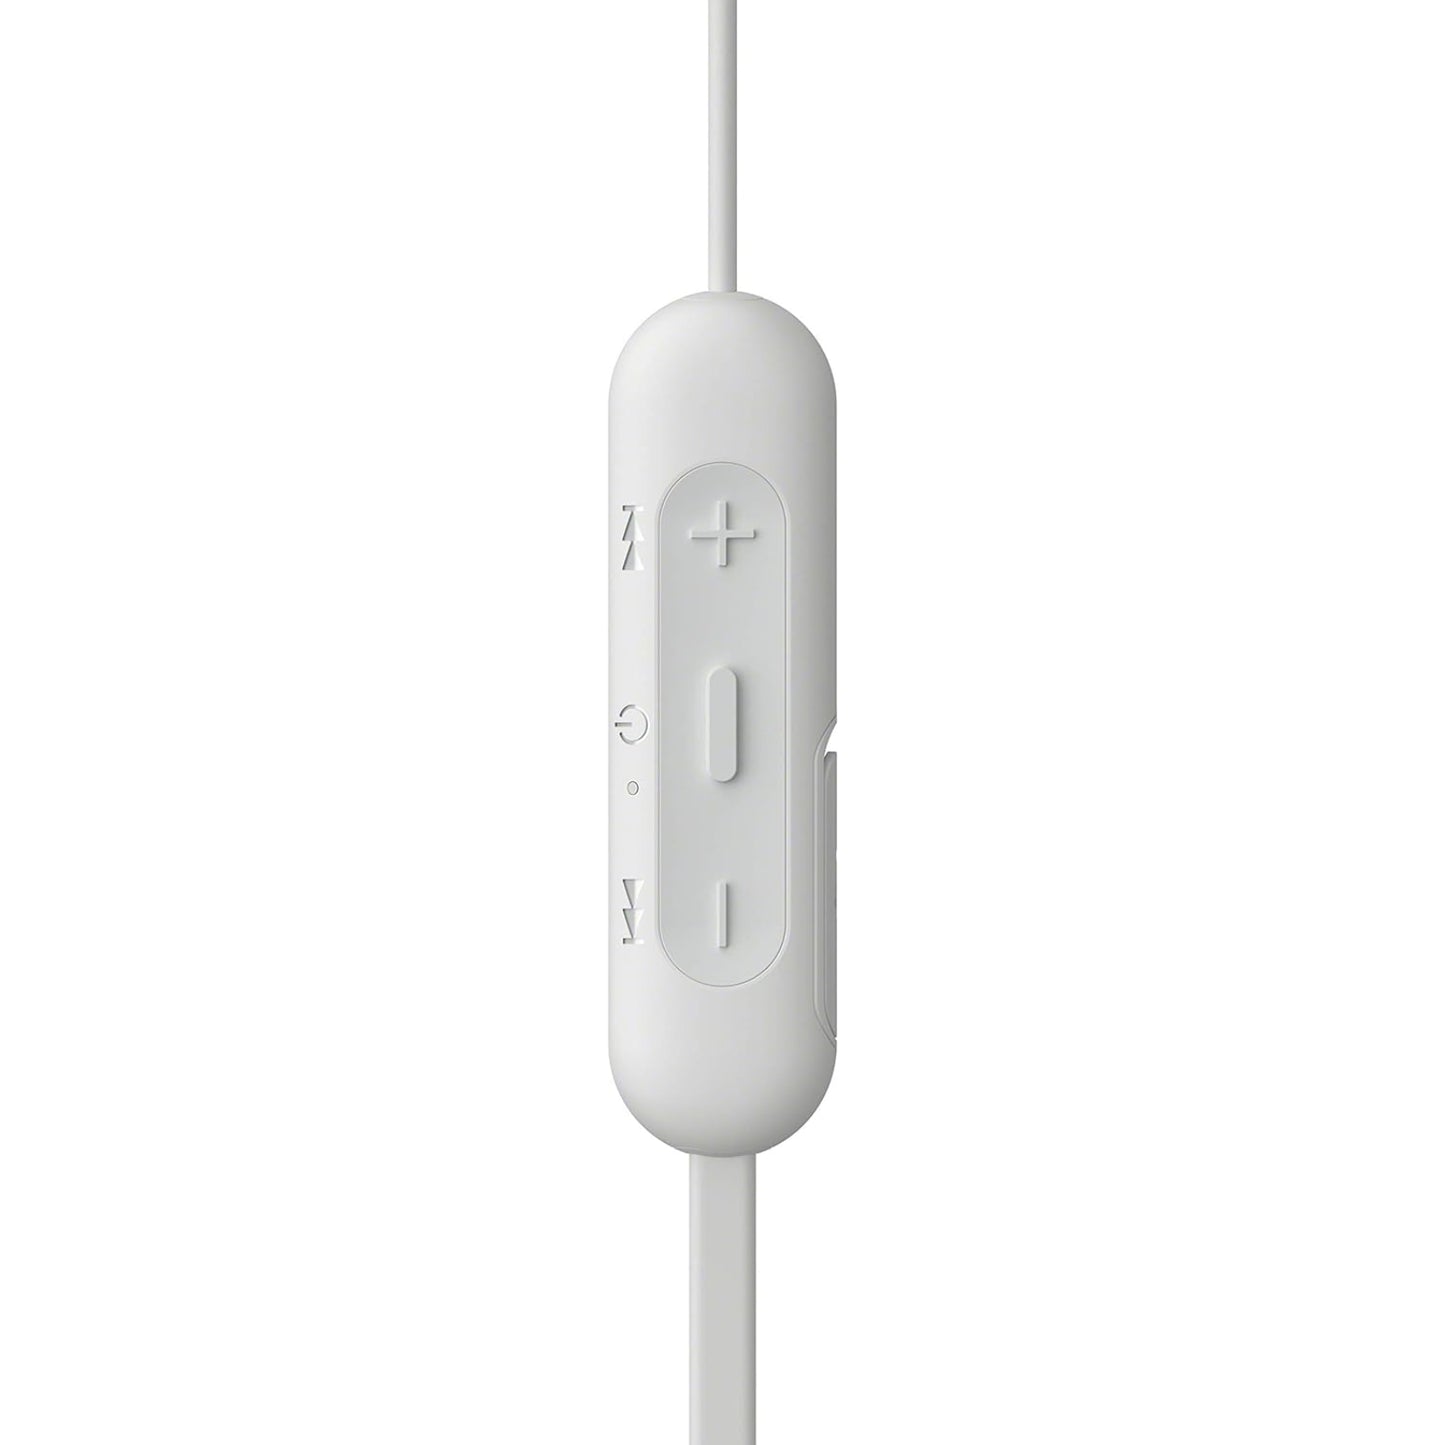 Sony Wi-c200 Wireless In-ear Headphones White - MyMobile